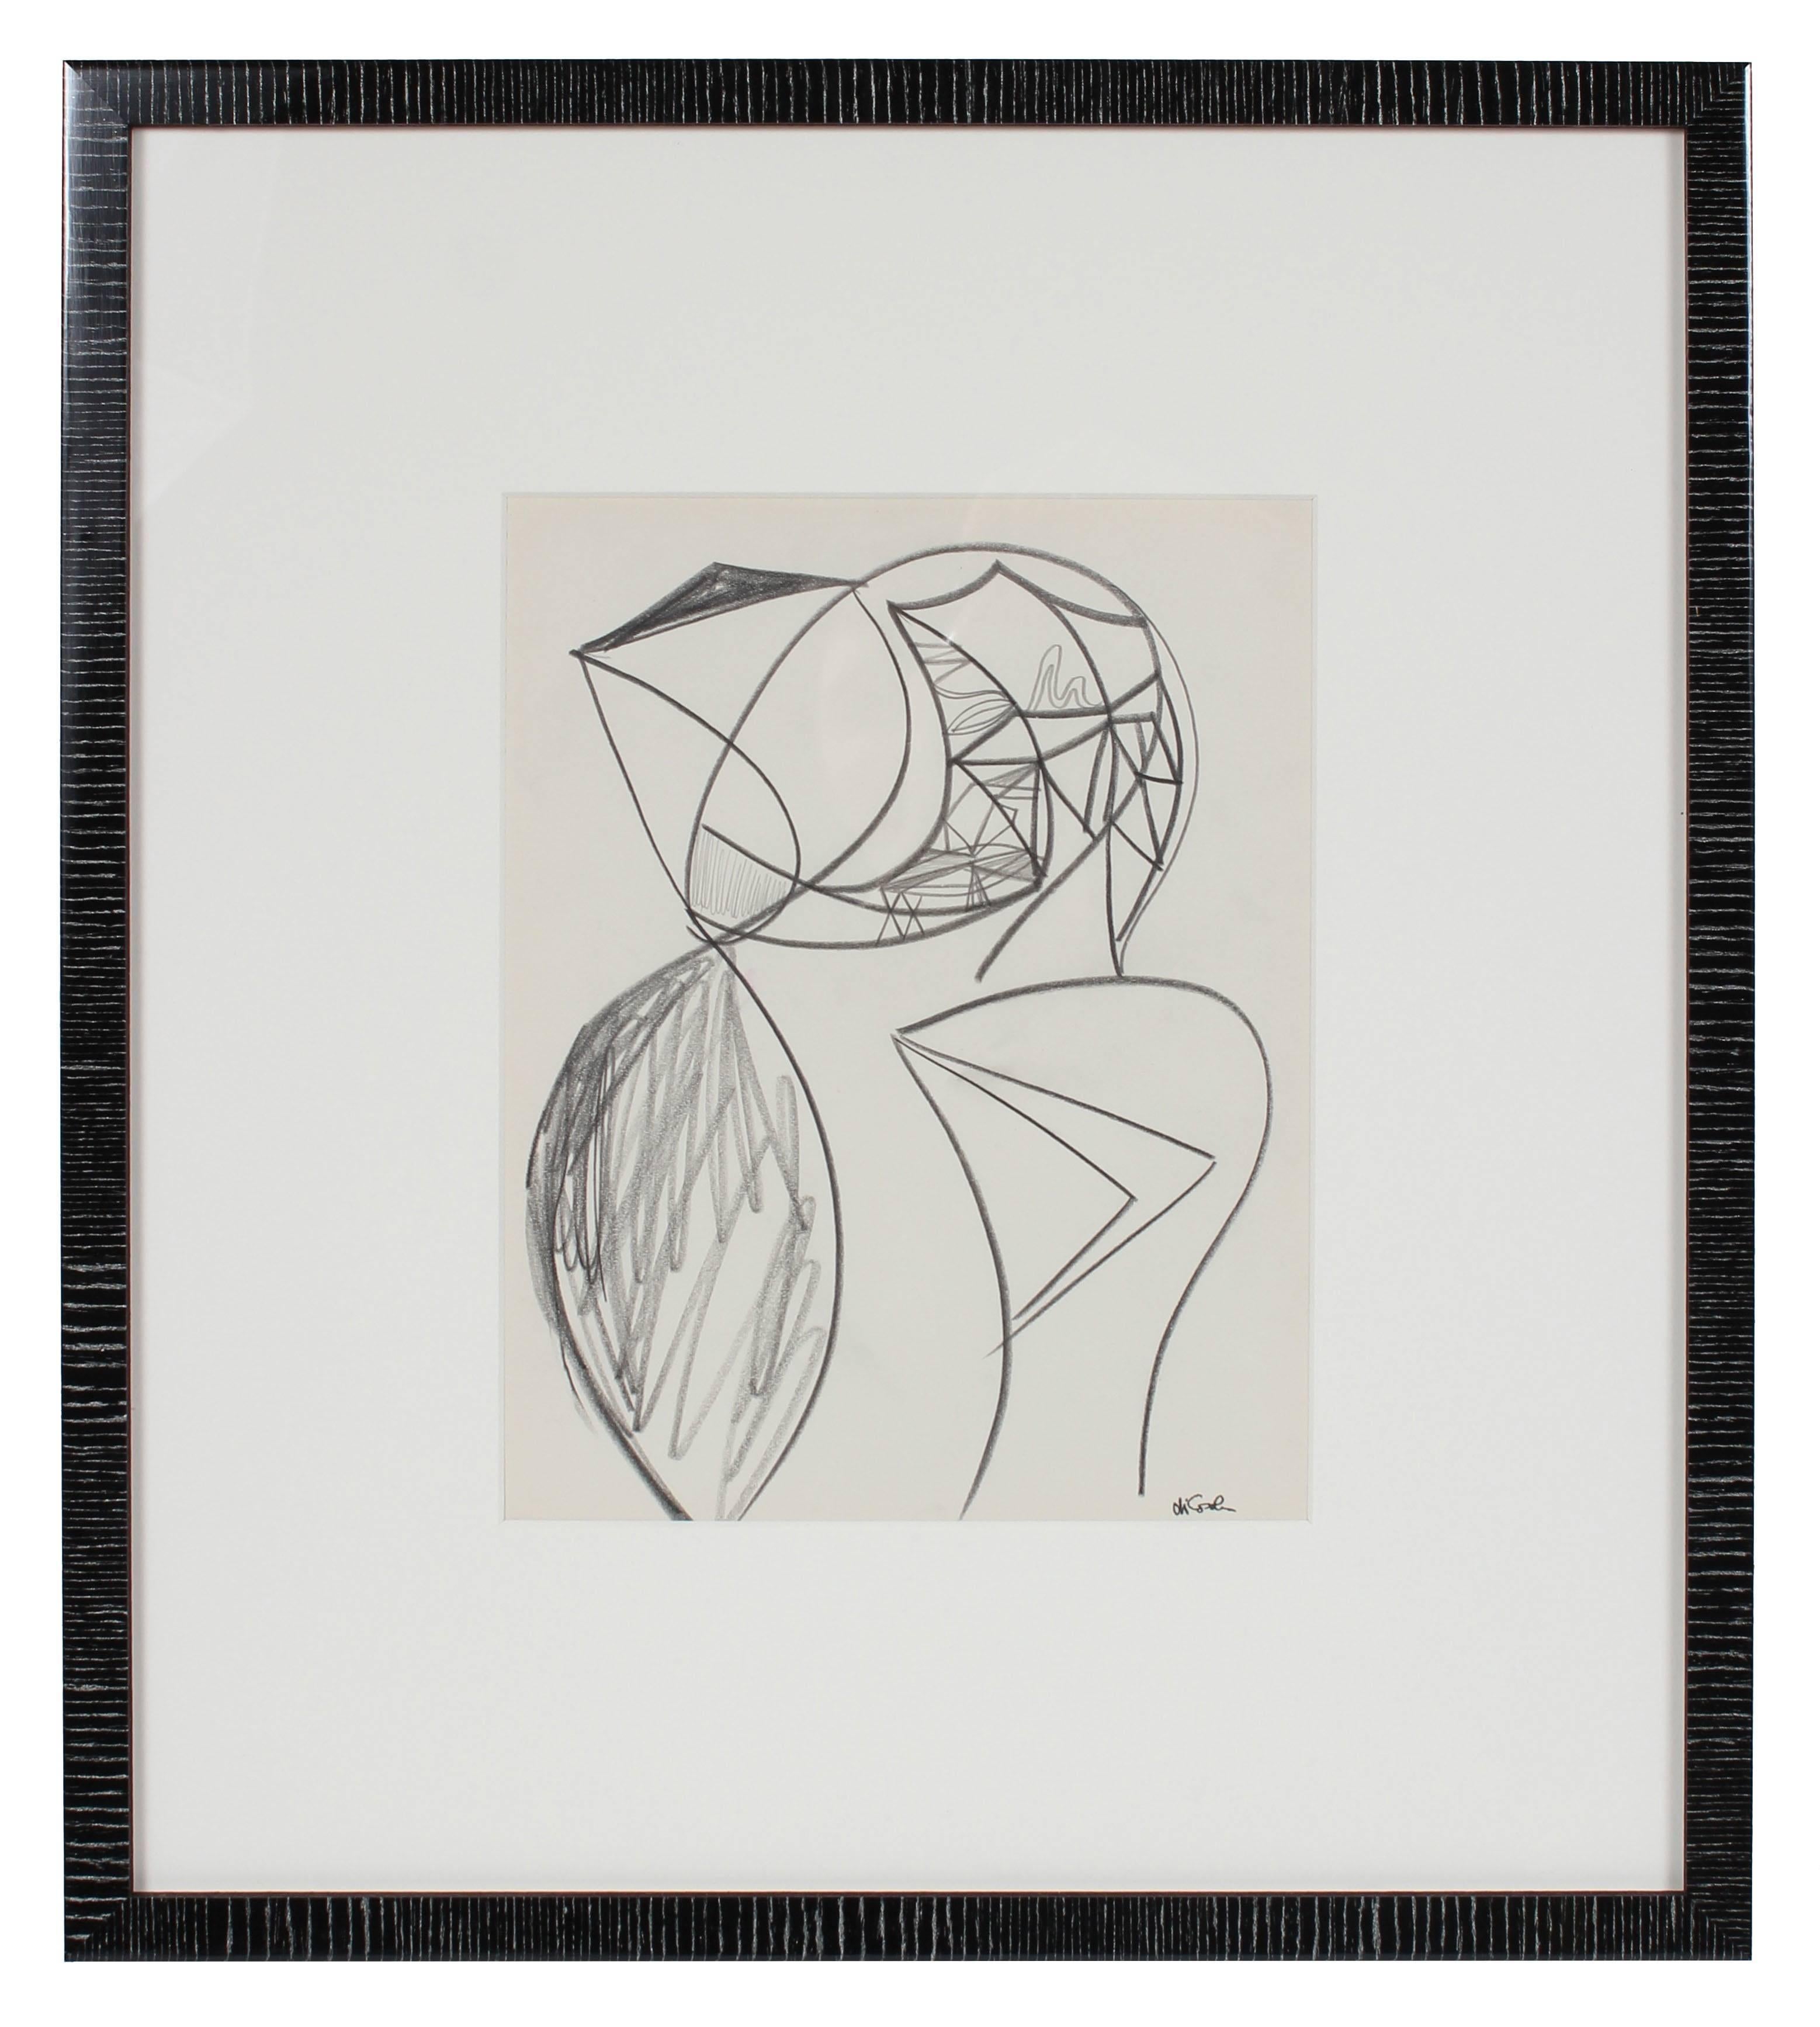 Michael di Cosola Abstract Drawing - Monochromatic Surrealist Sketch in Graphite, 20th Century